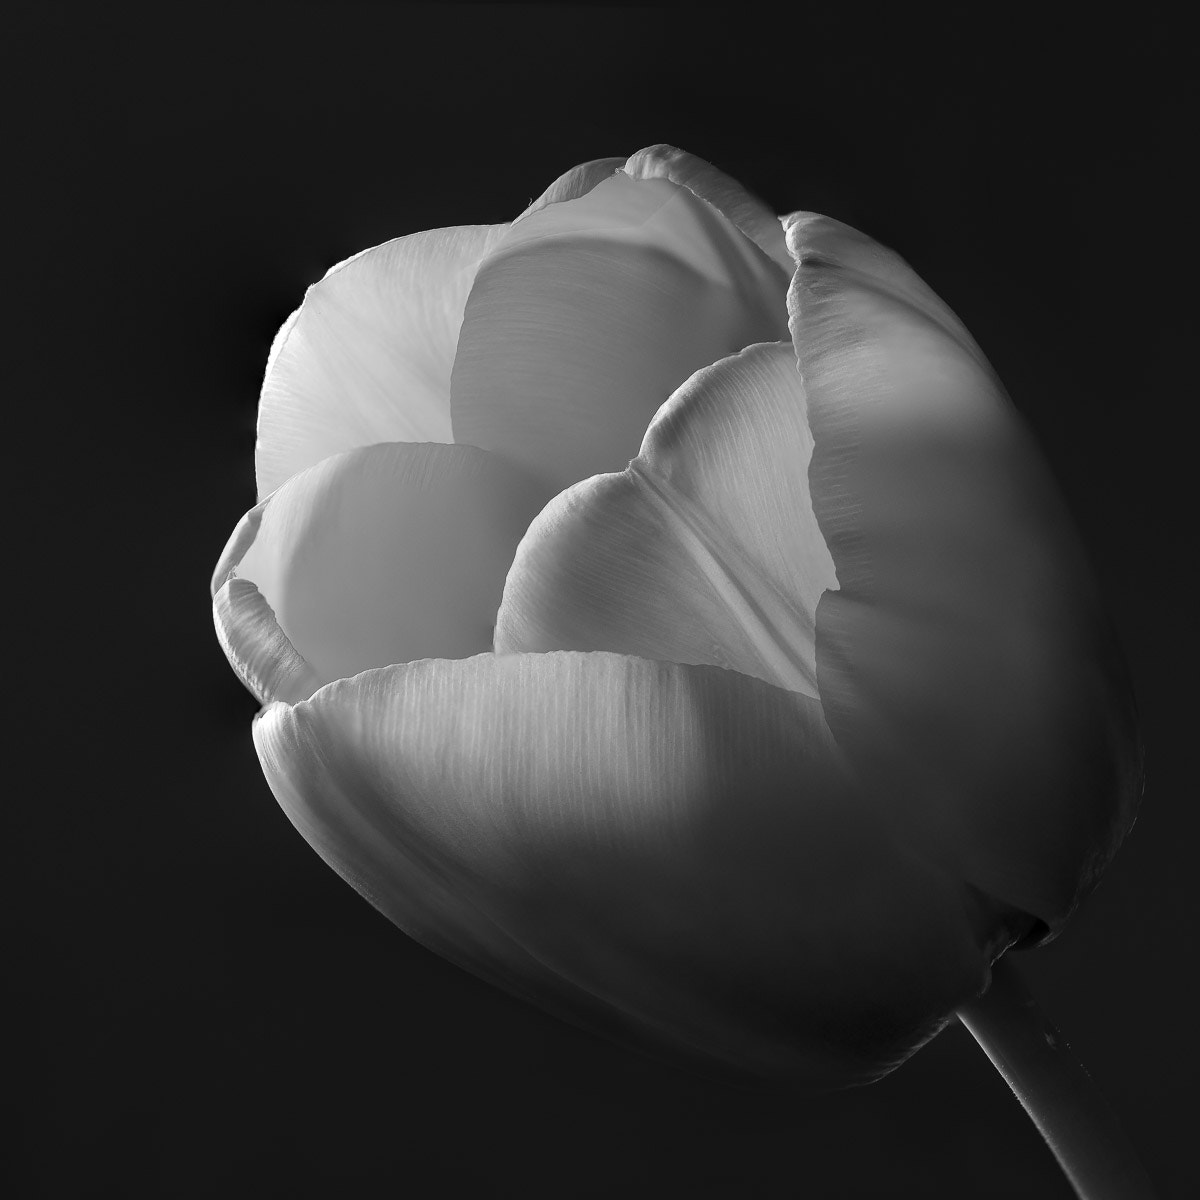 Nikon D750 sample photo. Tulipes en n&b photography